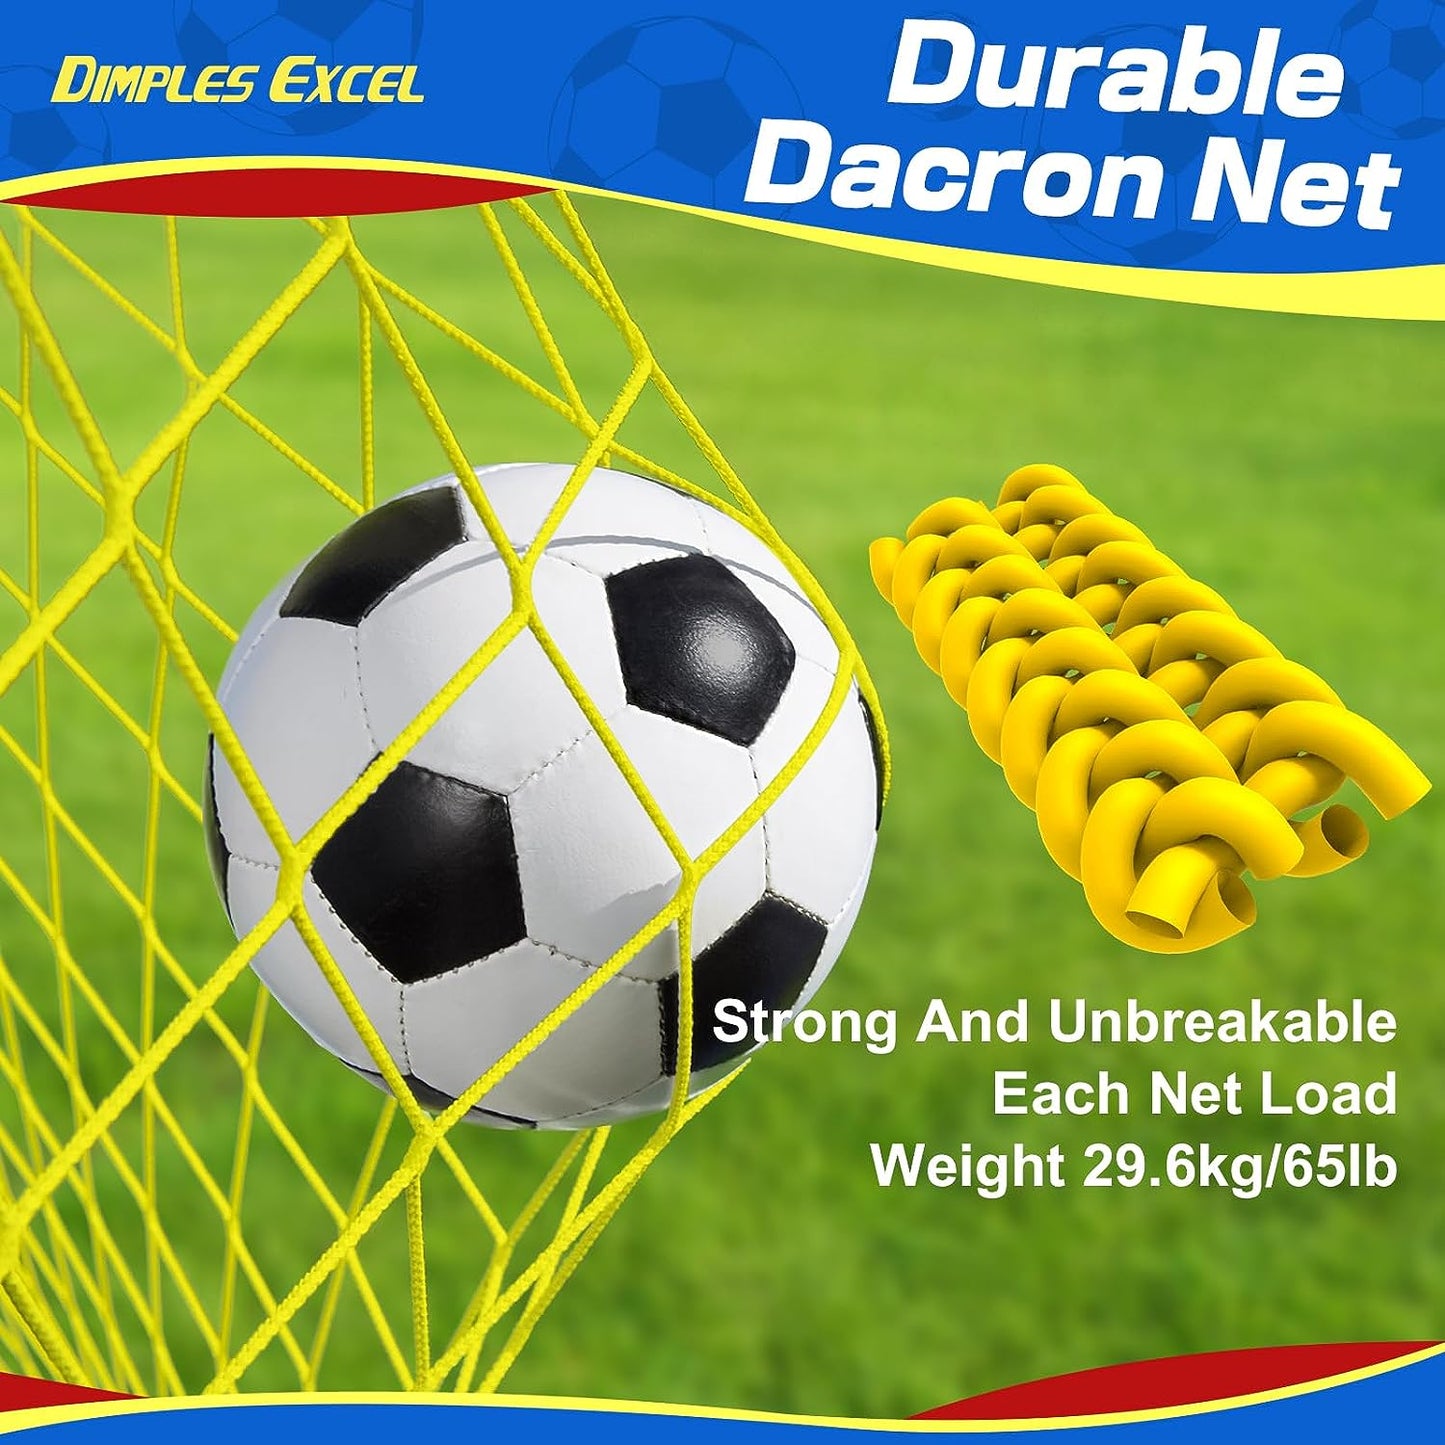 Dimples Excel Soccer Goal Soccer Net for Kids Backyard, 1 Pack (4' x 3', Blue+Yellow)